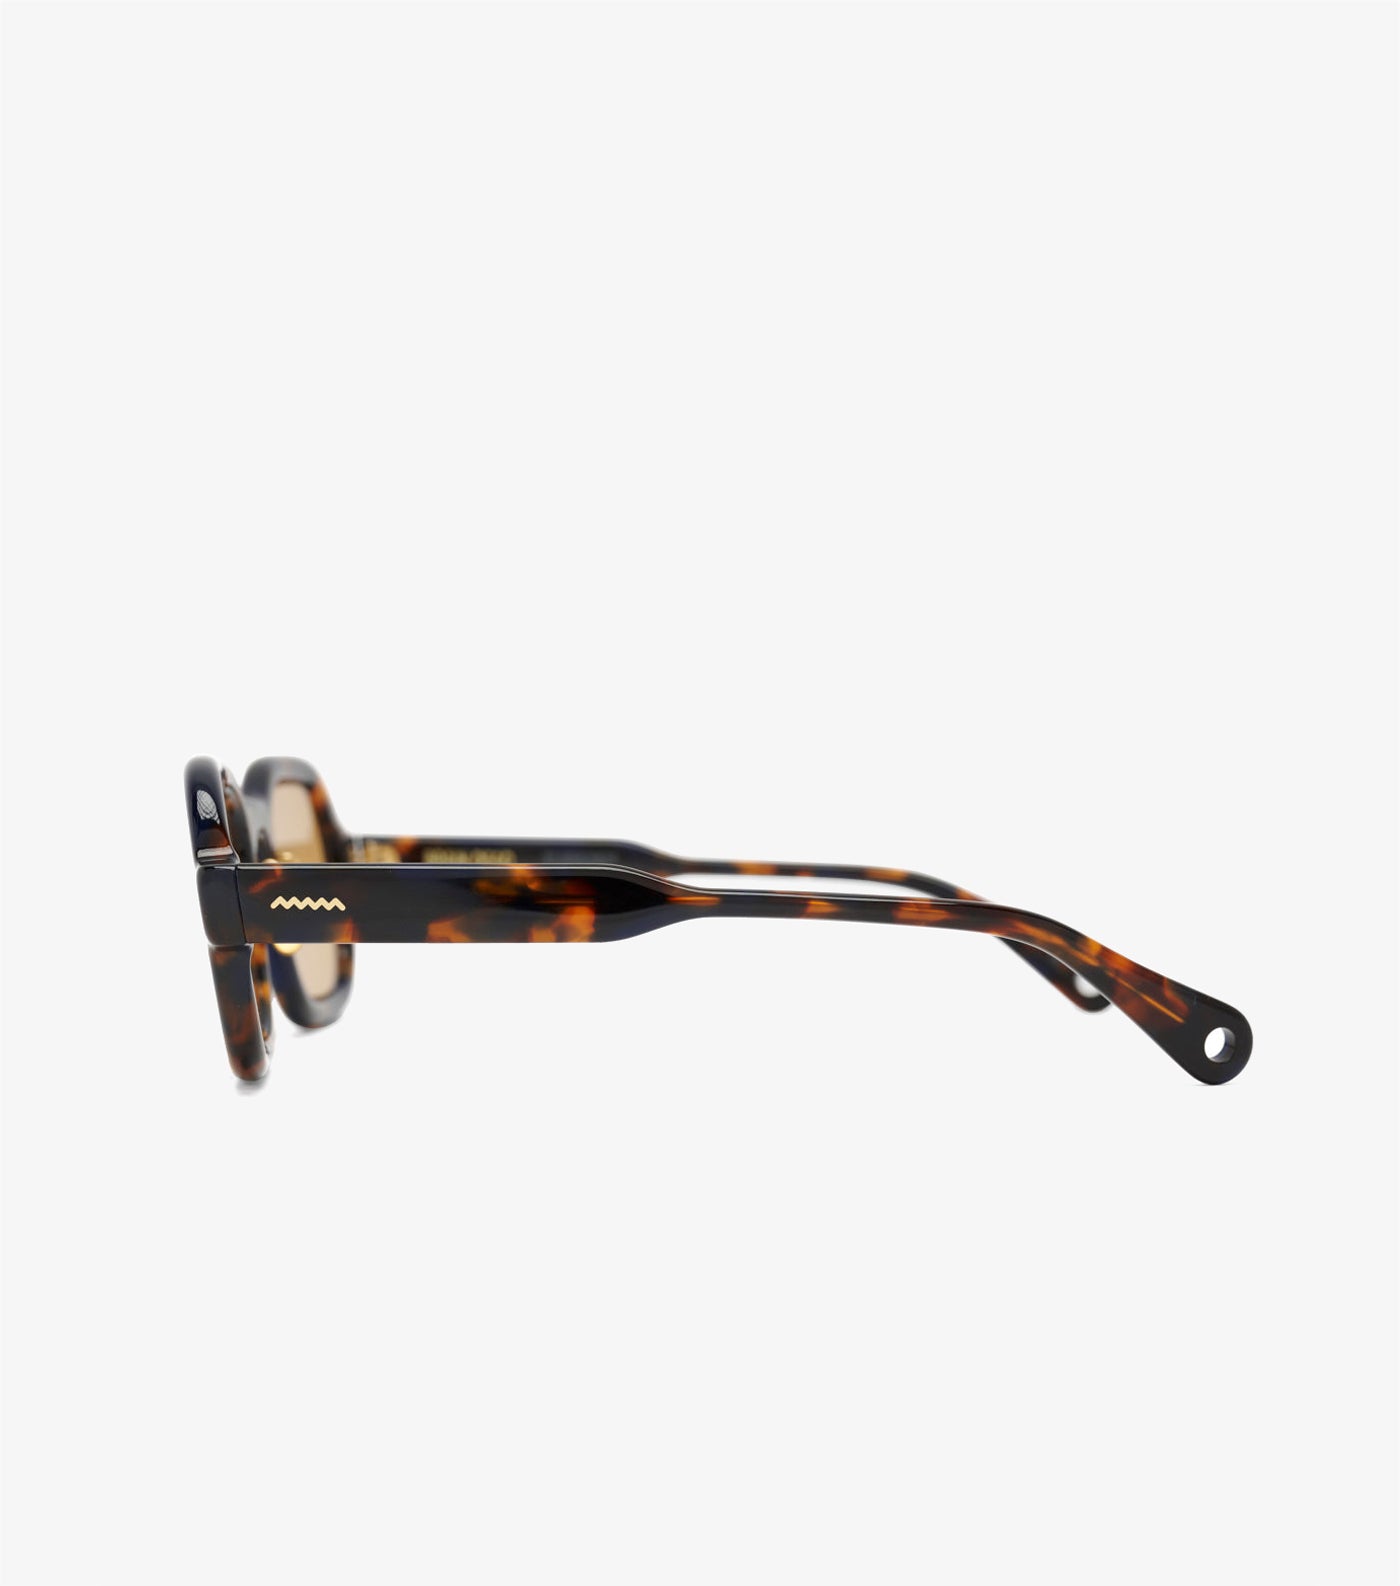 Newman Sunglasses (Petri Tortoise)